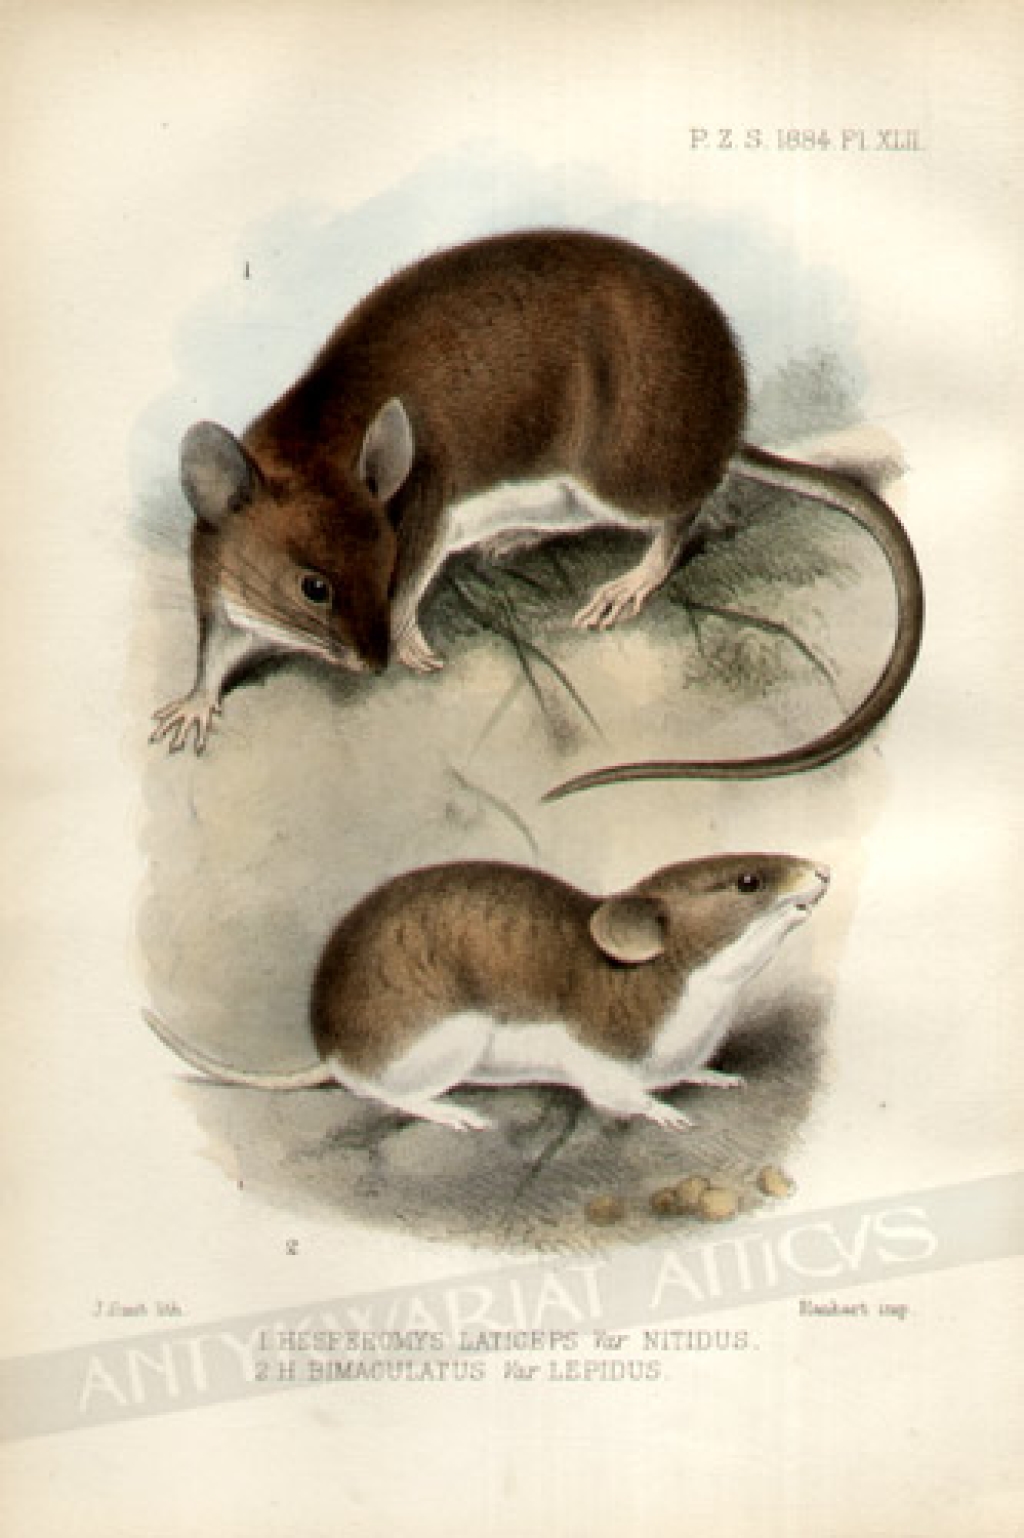 [rycina, 1887] 1.Hesperomys Laticeps var Nitidus 2. H.Bimaculatus var Lepidus